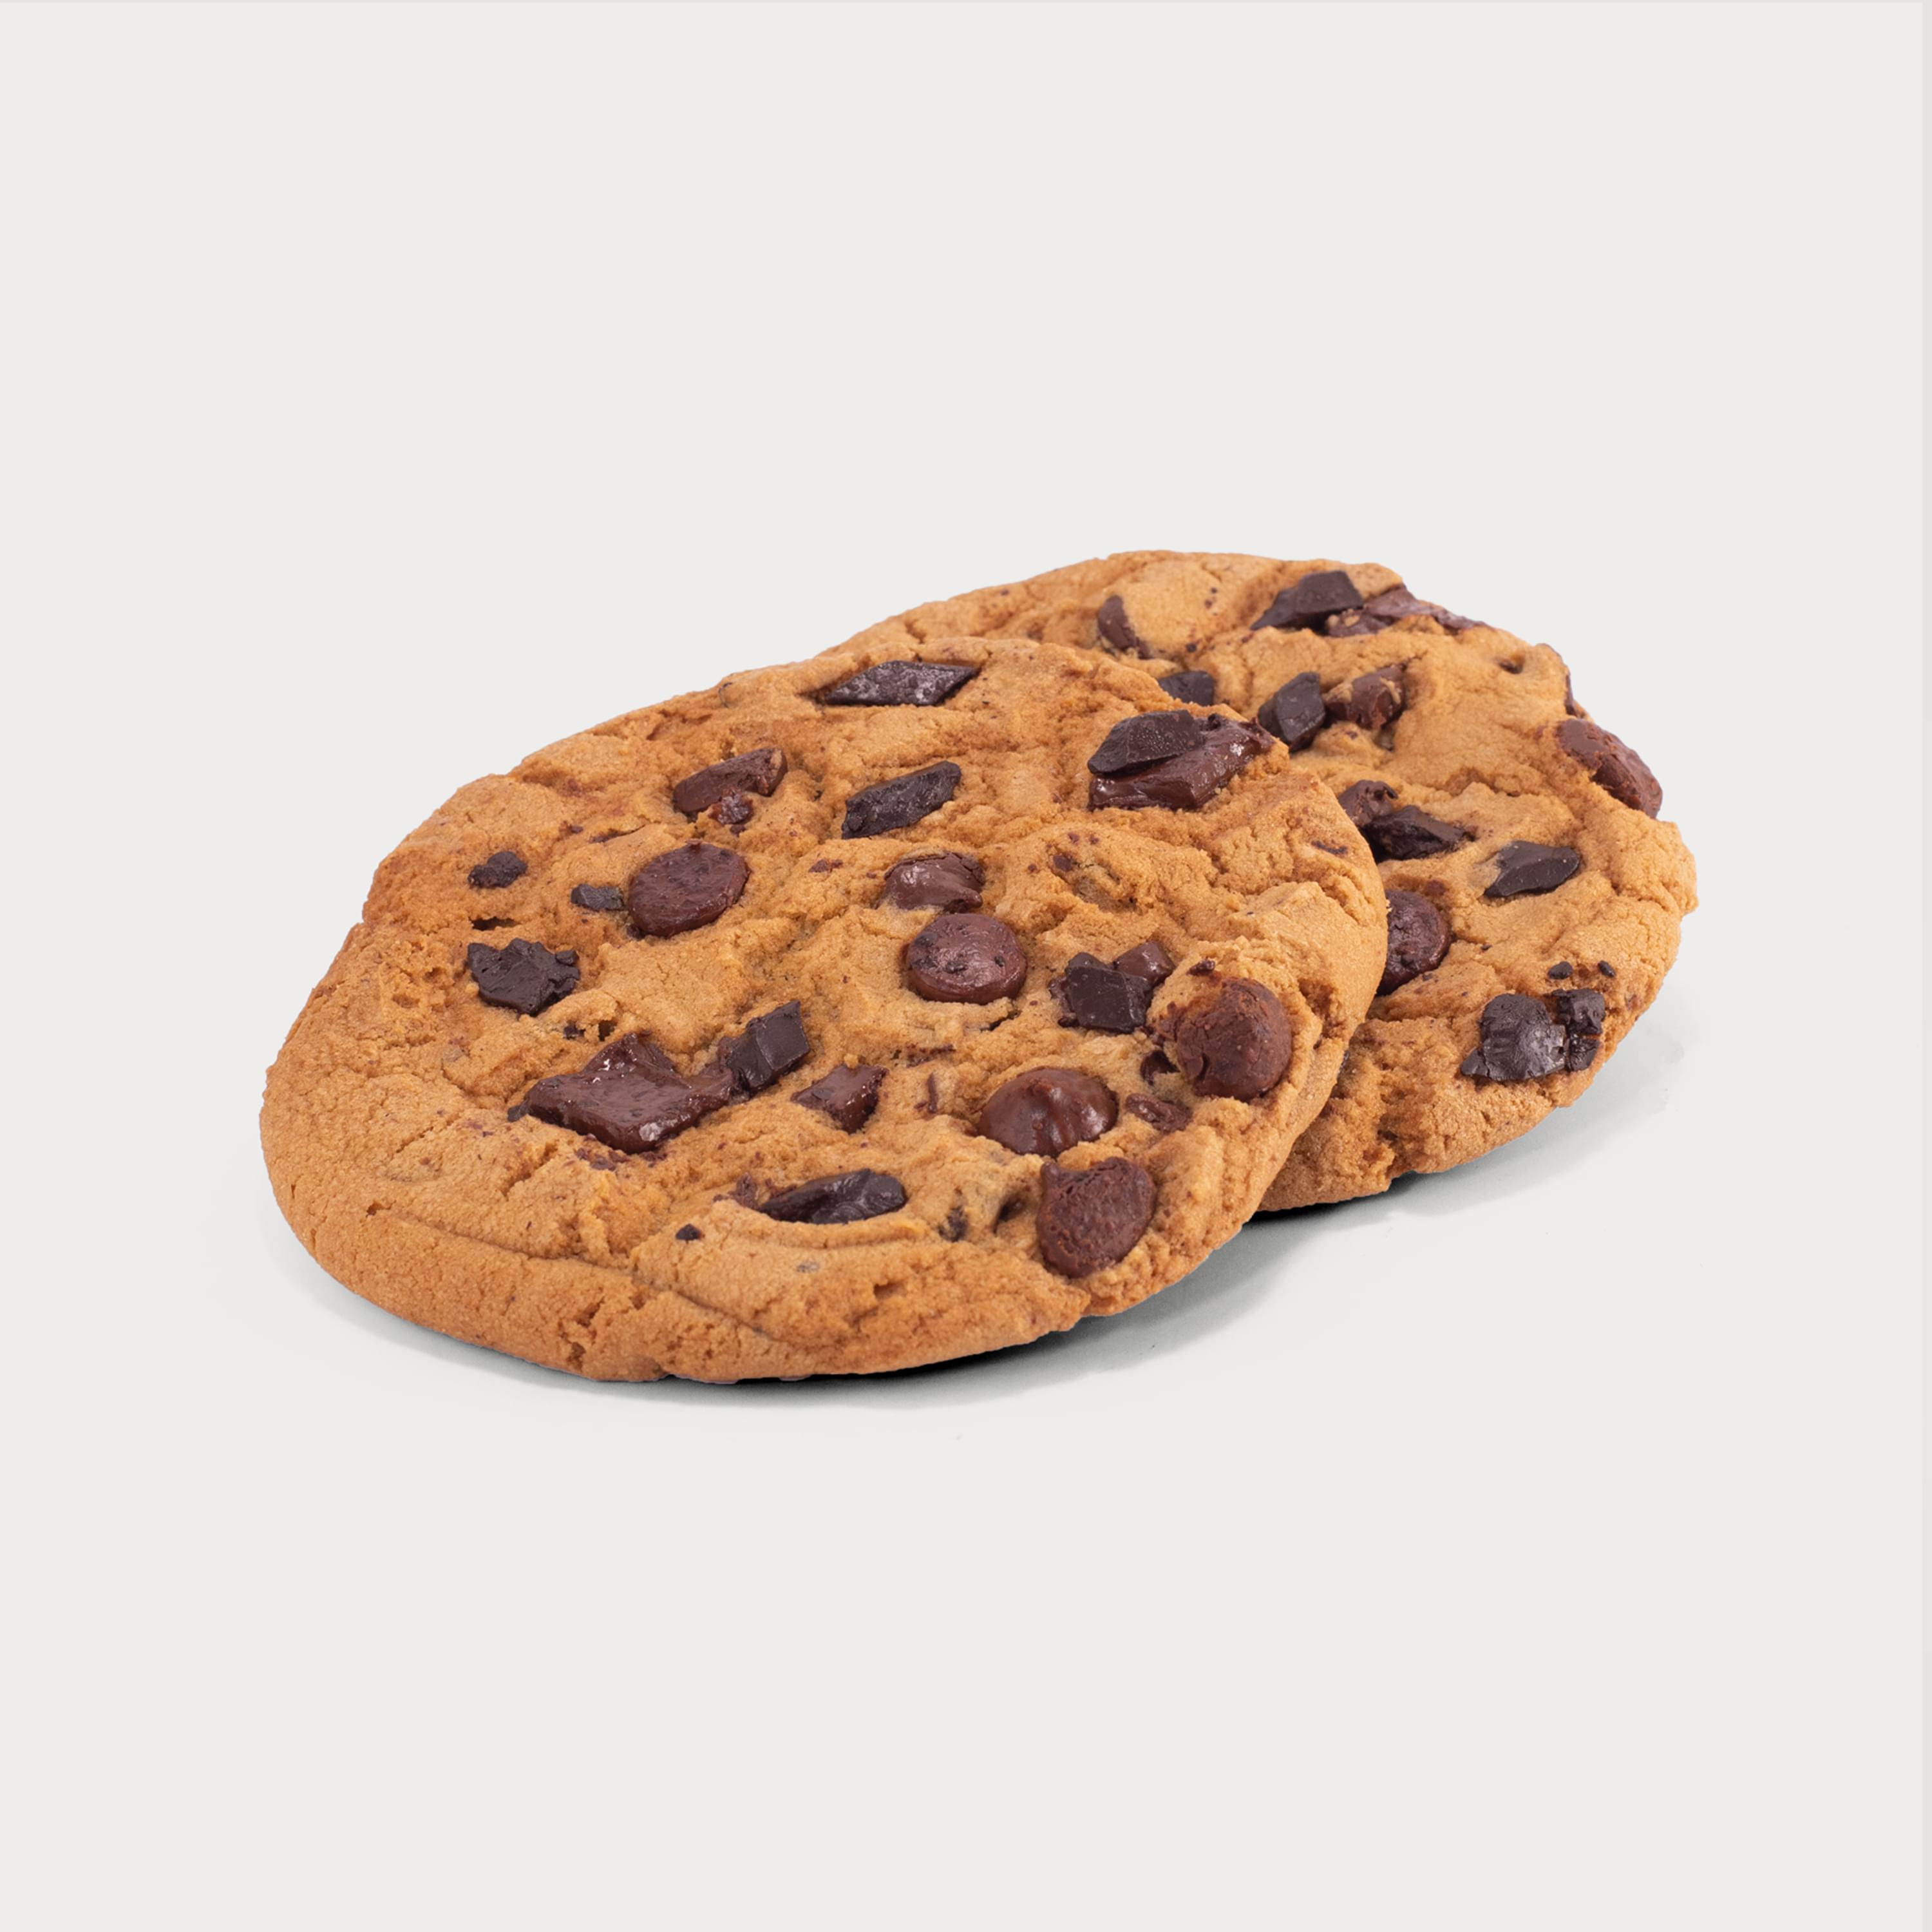 Pastry choc cookie thumb